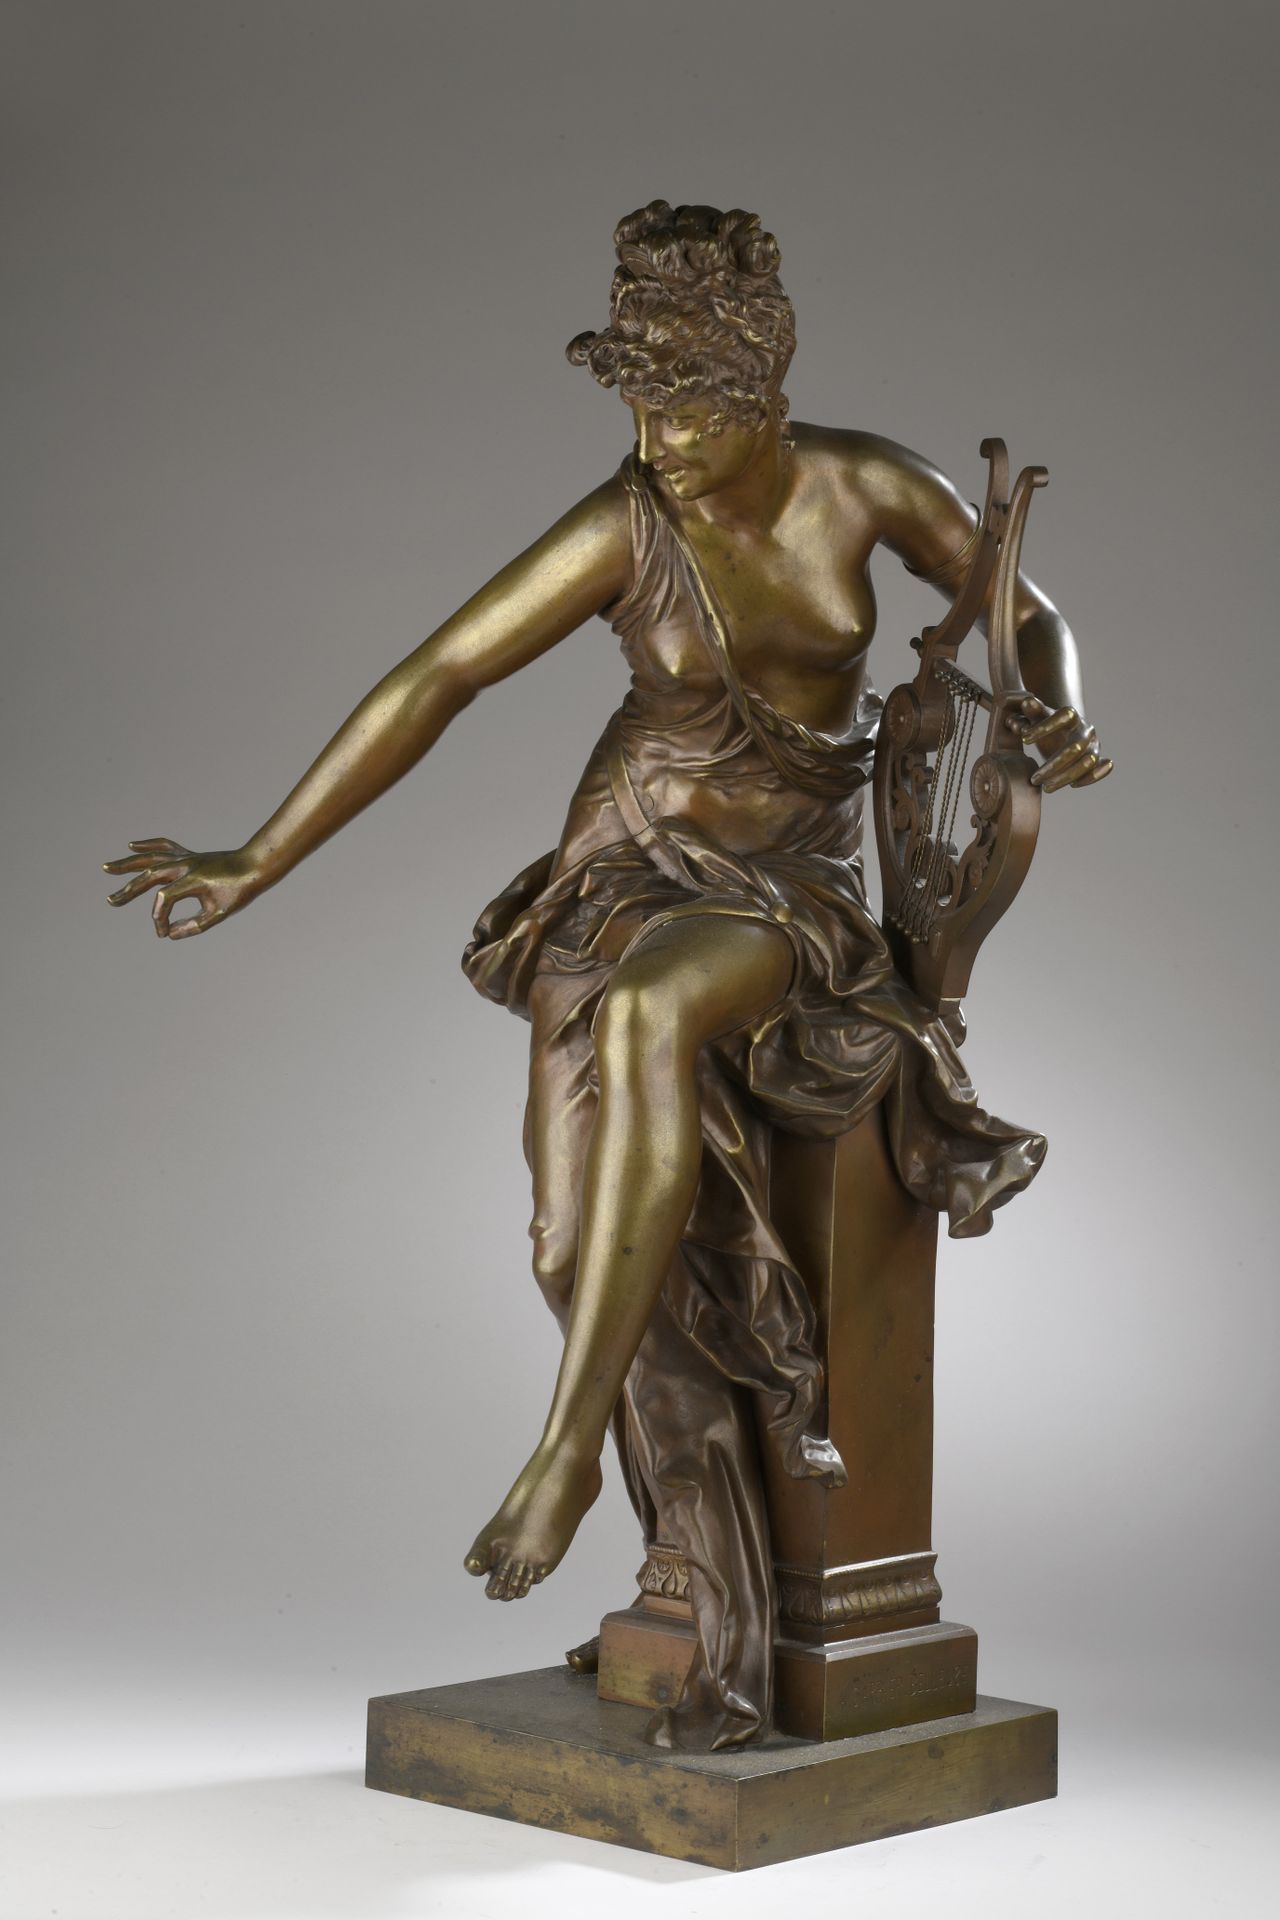 Null 阿尔伯特-埃内斯特-开利-贝勒兹 (1824-1887)
旋律
青铜，带褐色铜锈
署名 "CARRIER-BELLEUSE
H.62厘米